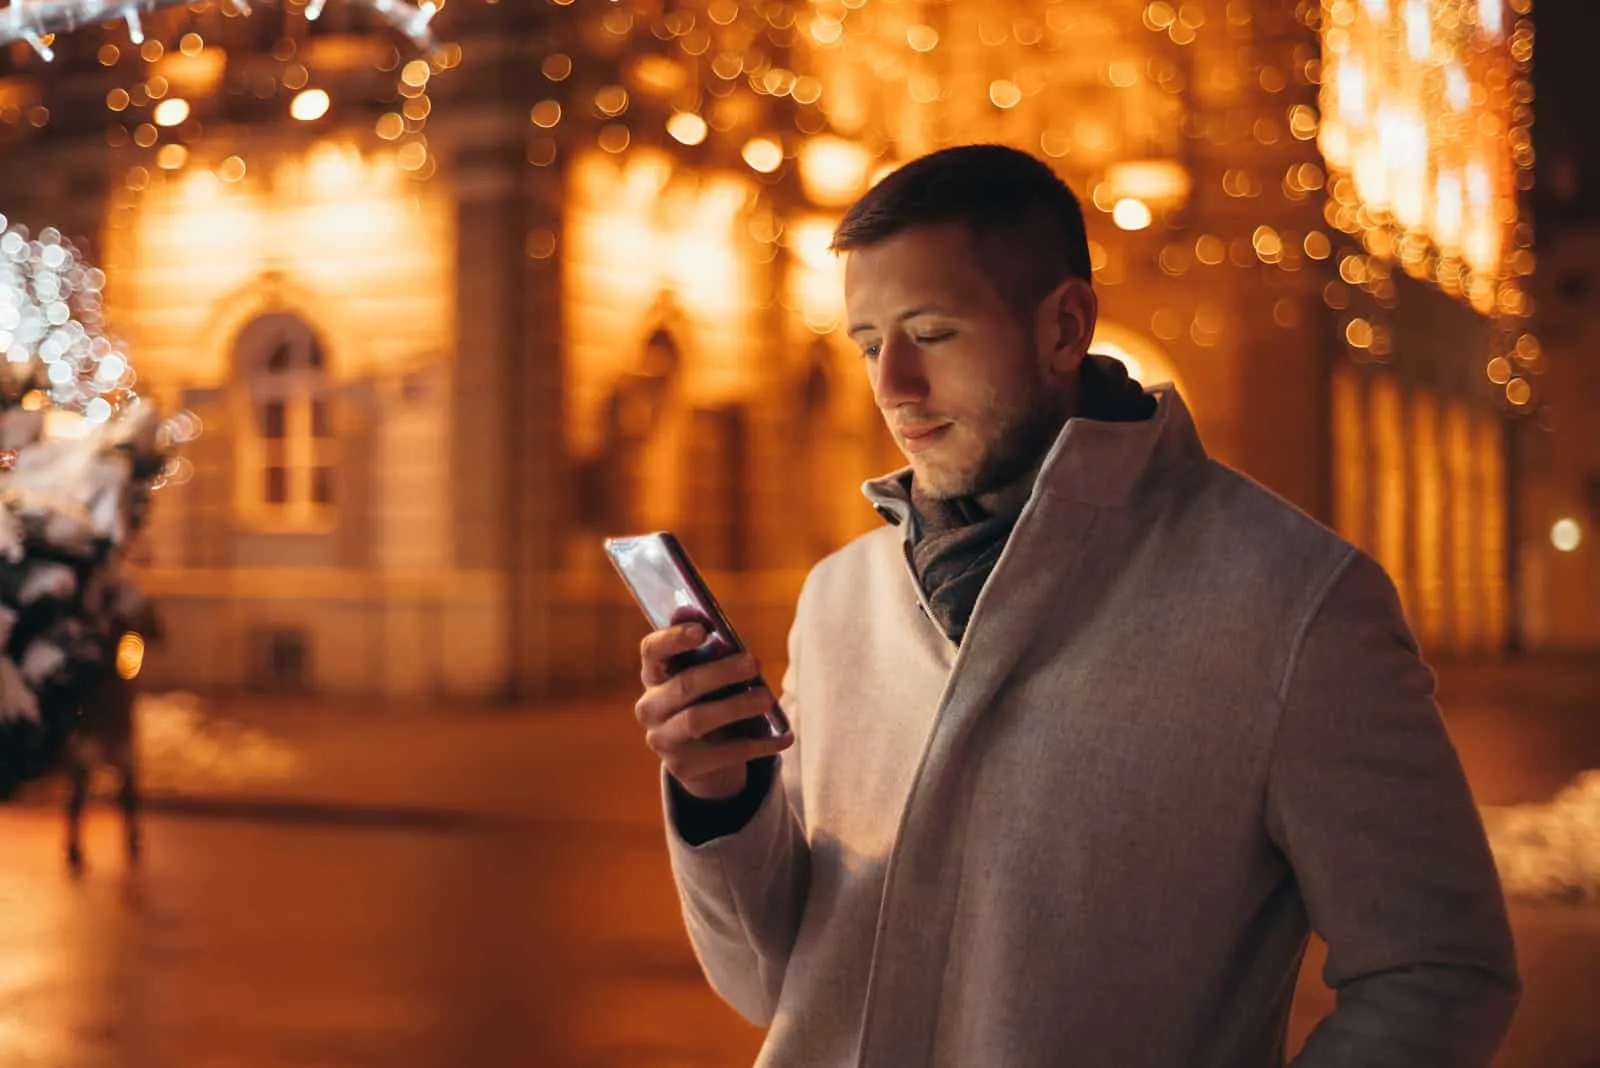 man walking at night responding to i miss you text